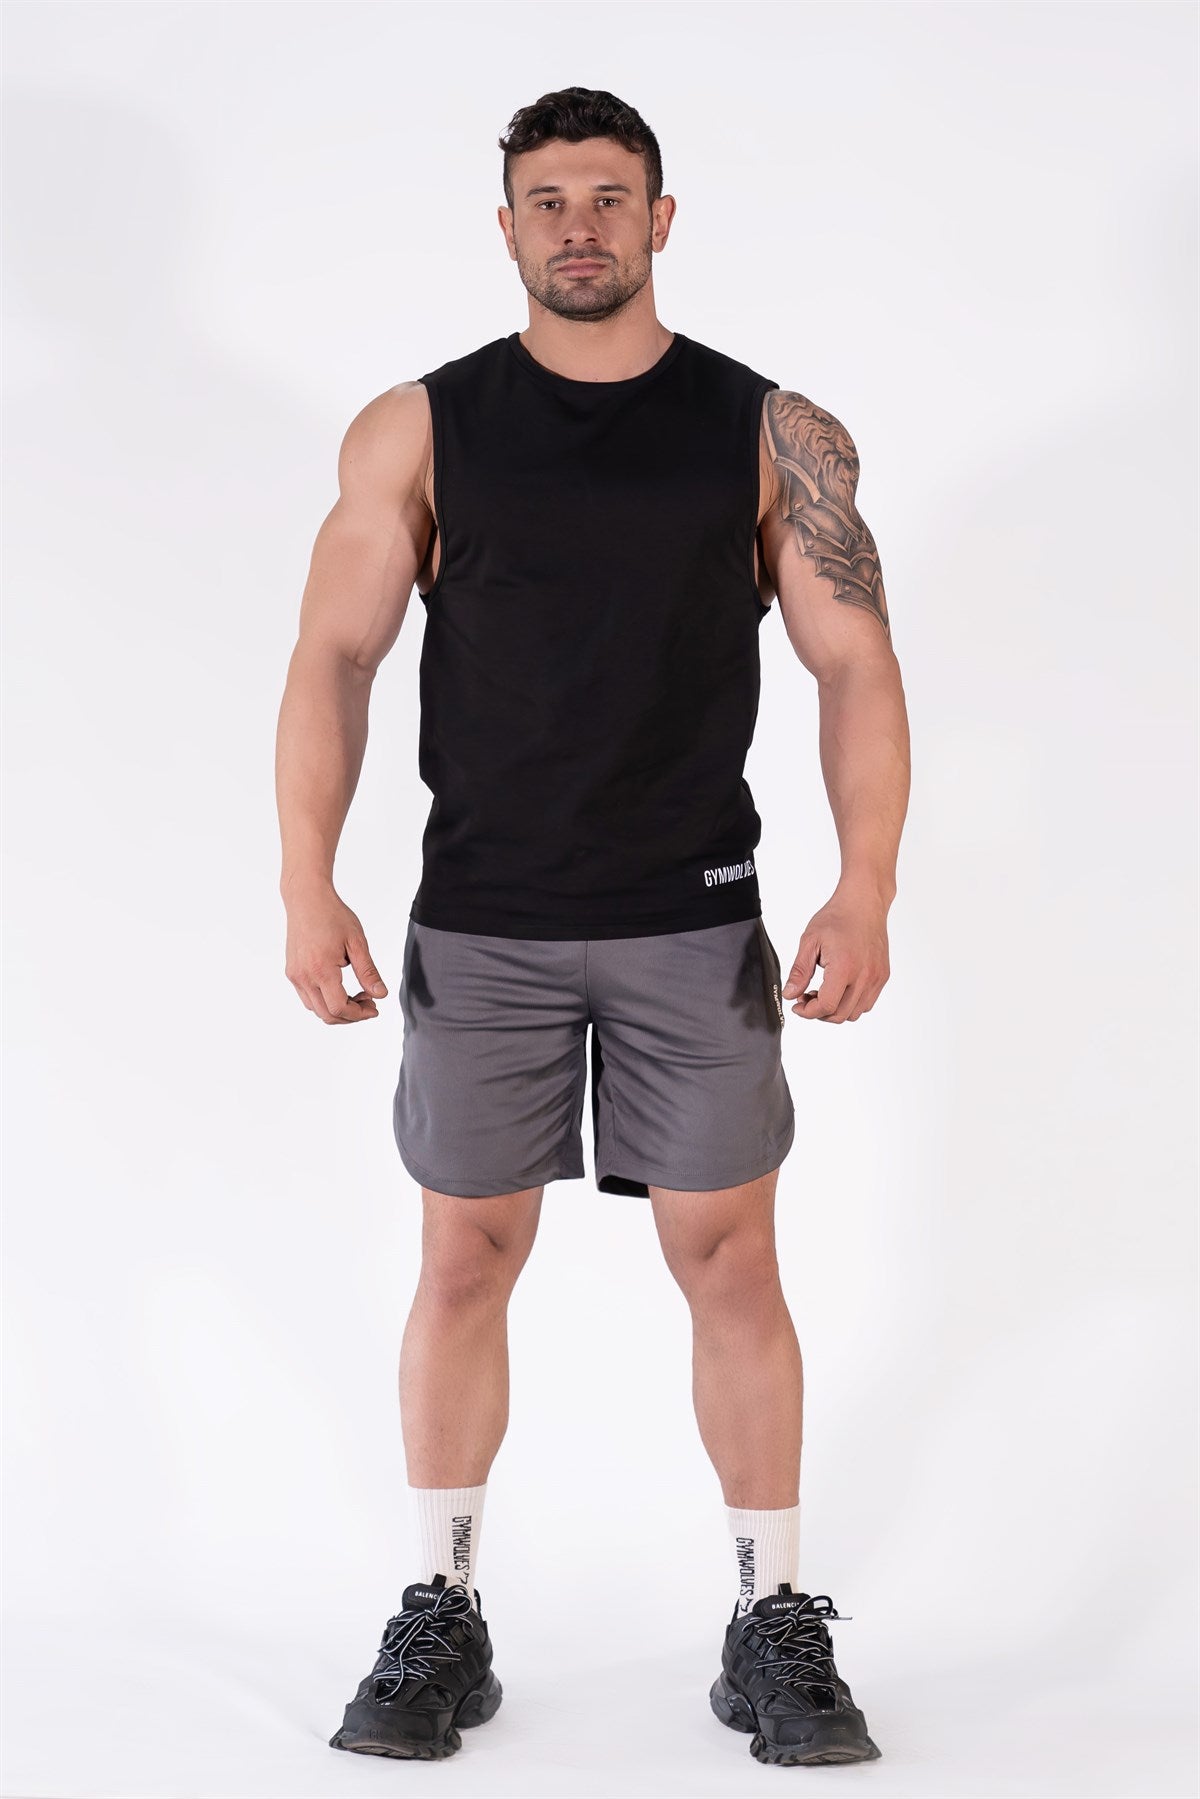 Gymwolves Men's Sleeveless T-Shirt | Men's Sports T-Shirt | Workout Tank Top | Noir - Shakeproteine